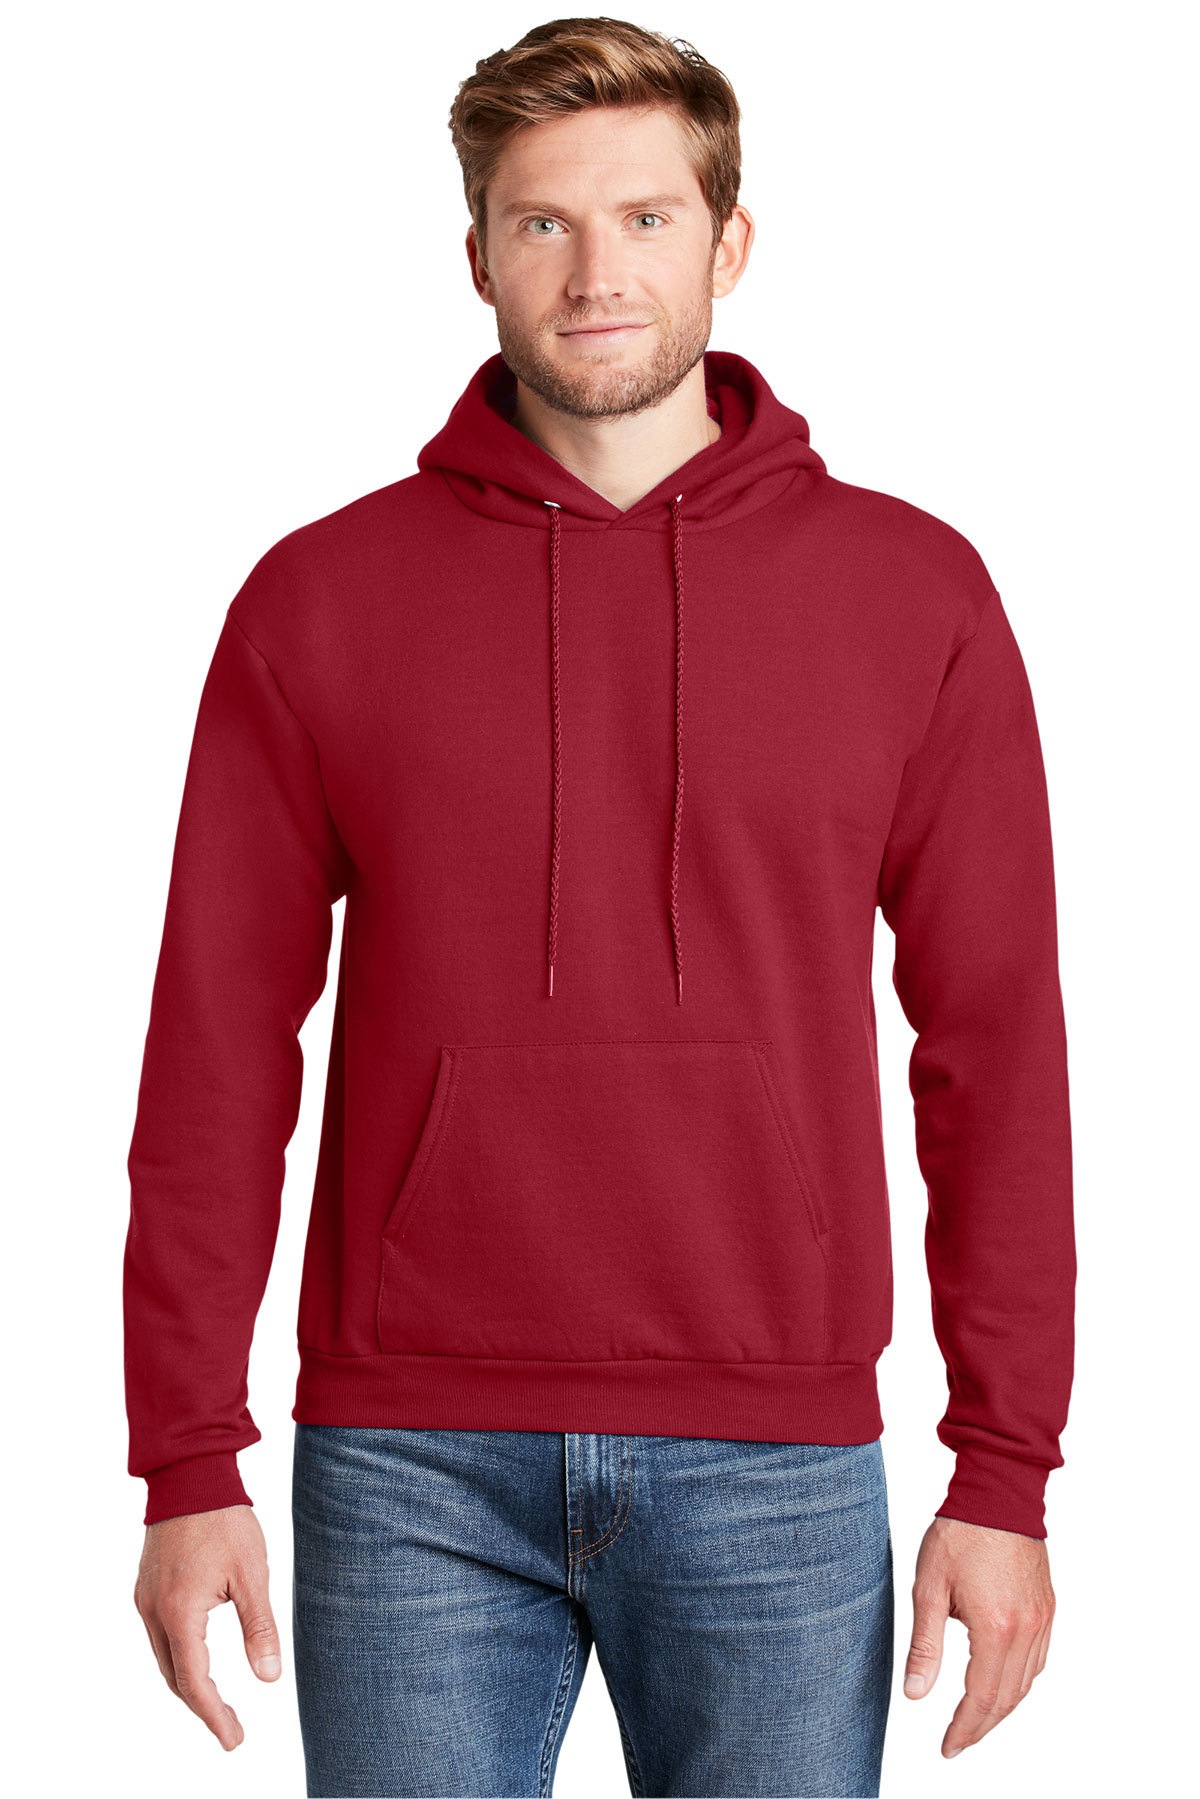 Hanes EcoSmart - Pullover Hooded Sweatshirt, Product